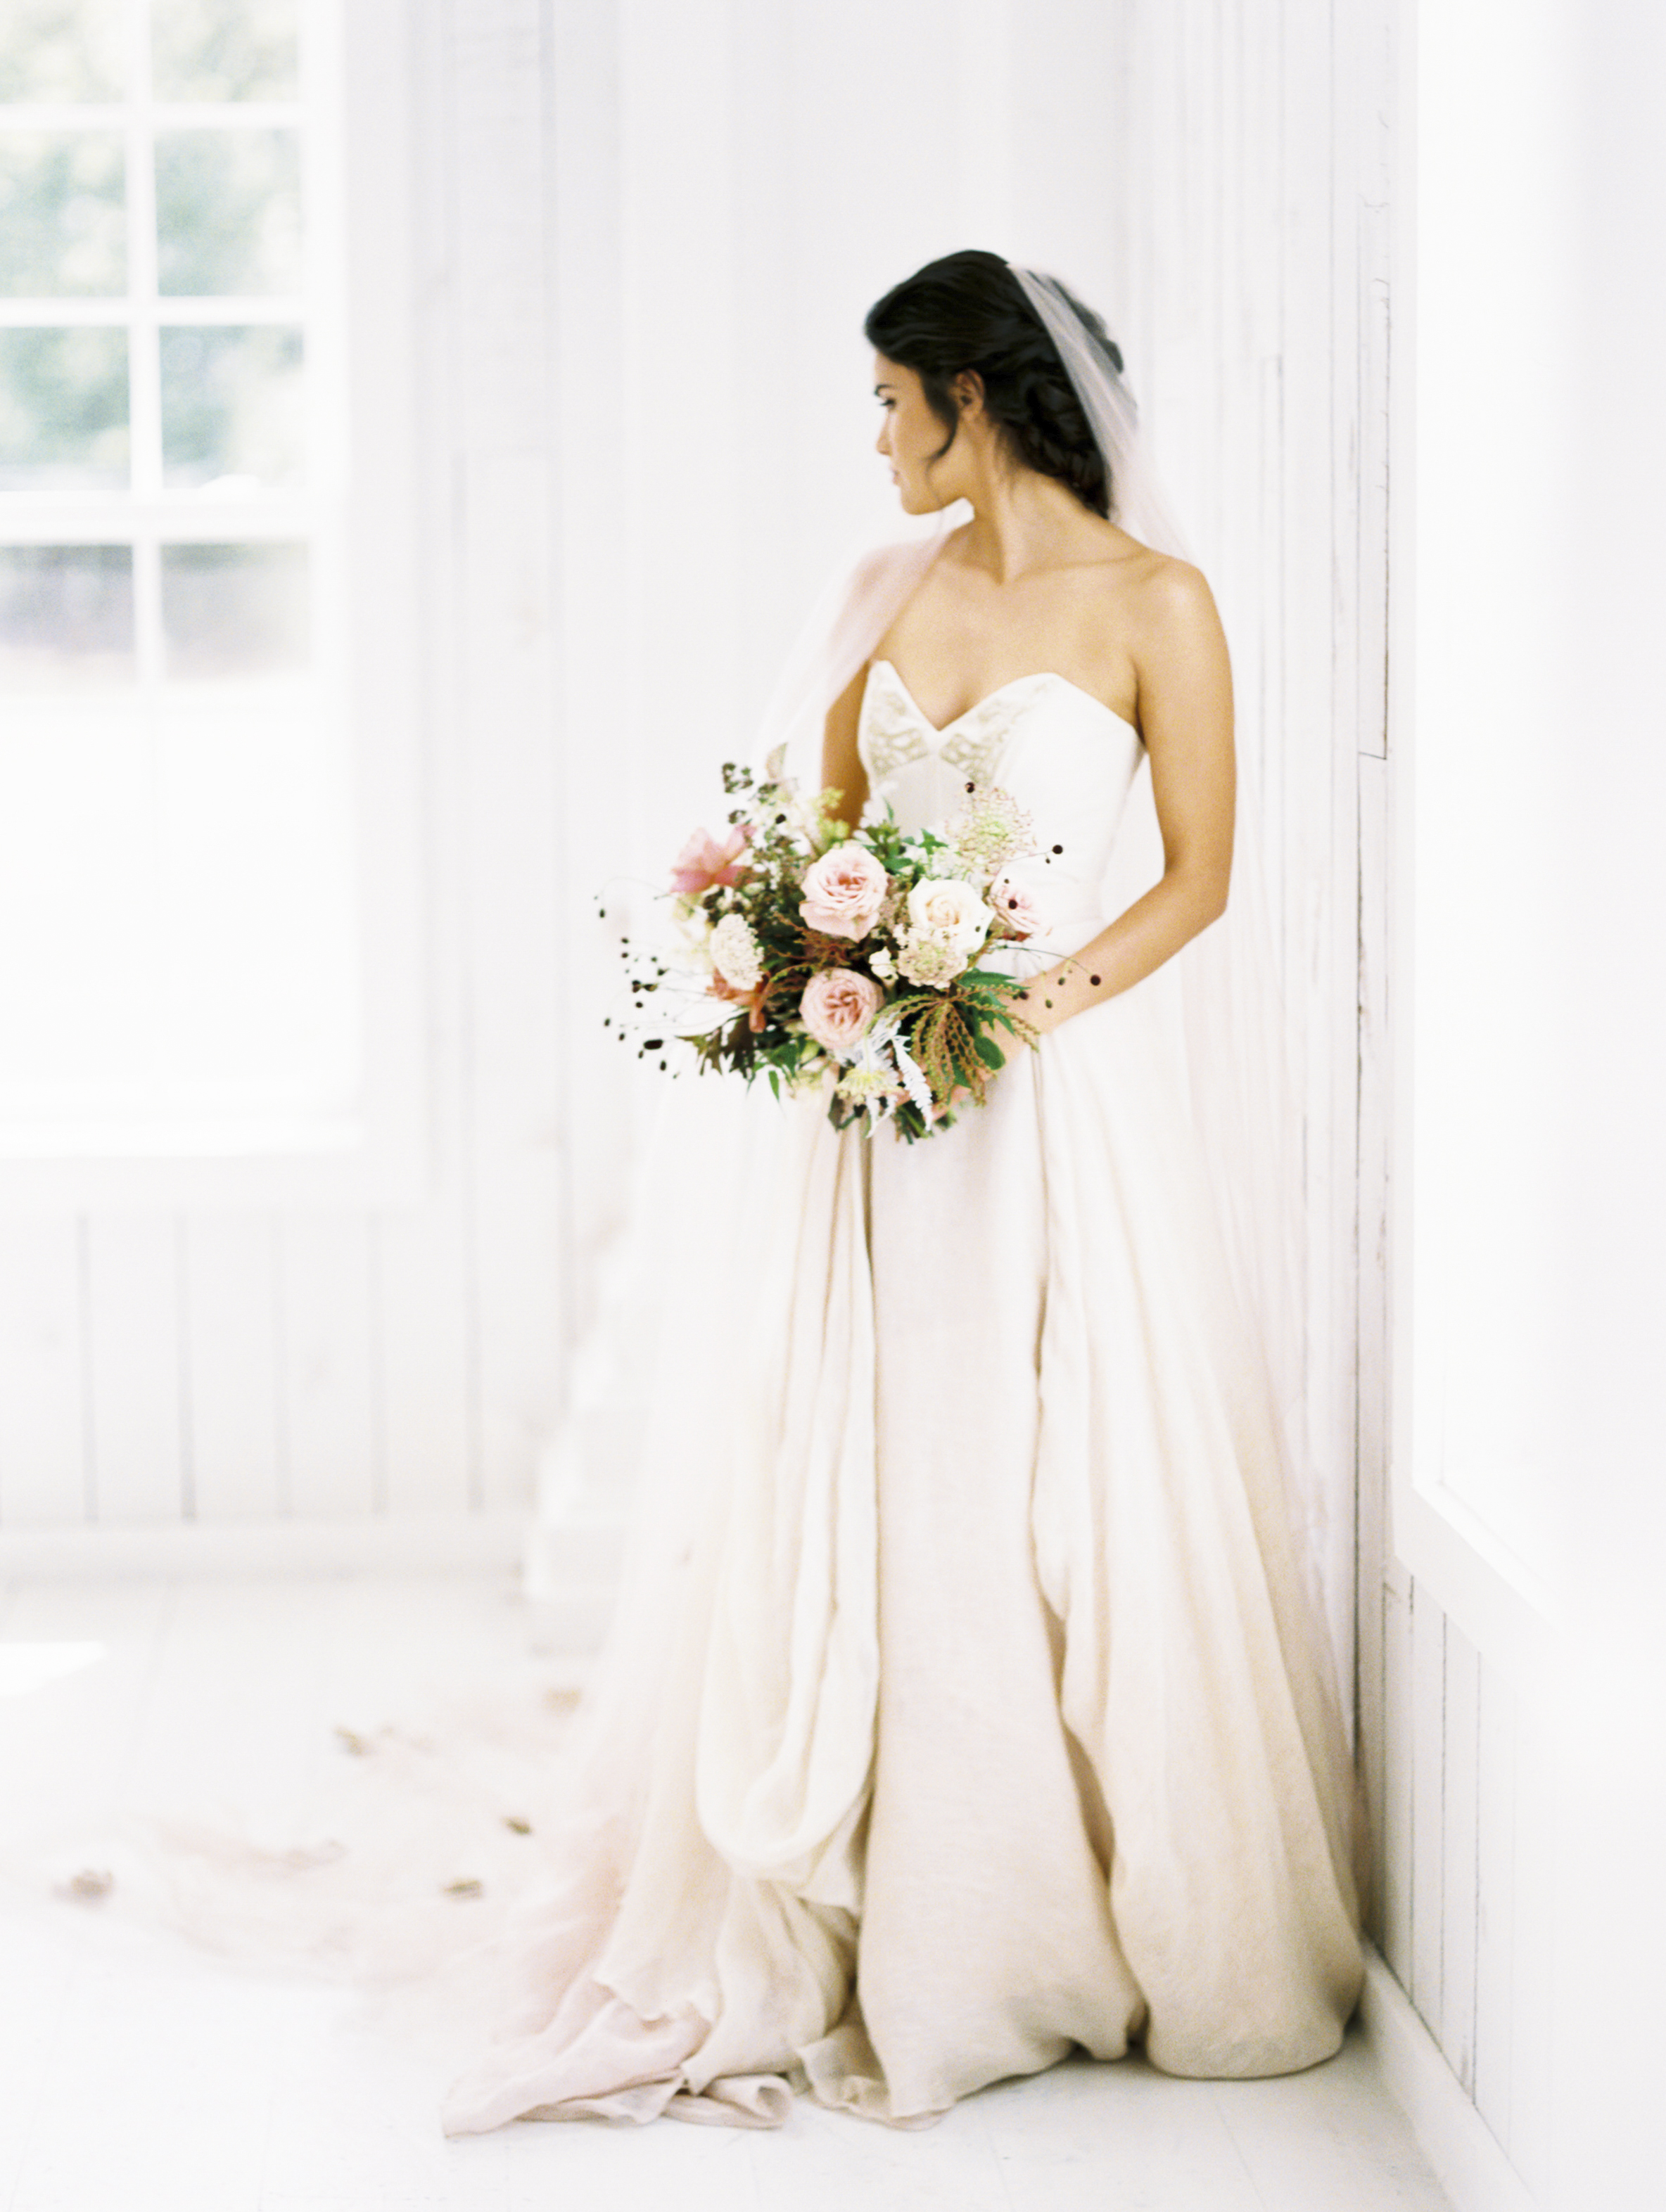 Carol Hannah fritillary wedding dress kensington skirt-1-260Carol Hannah fritillary wedding dress kensington skirt-1-260.JPG